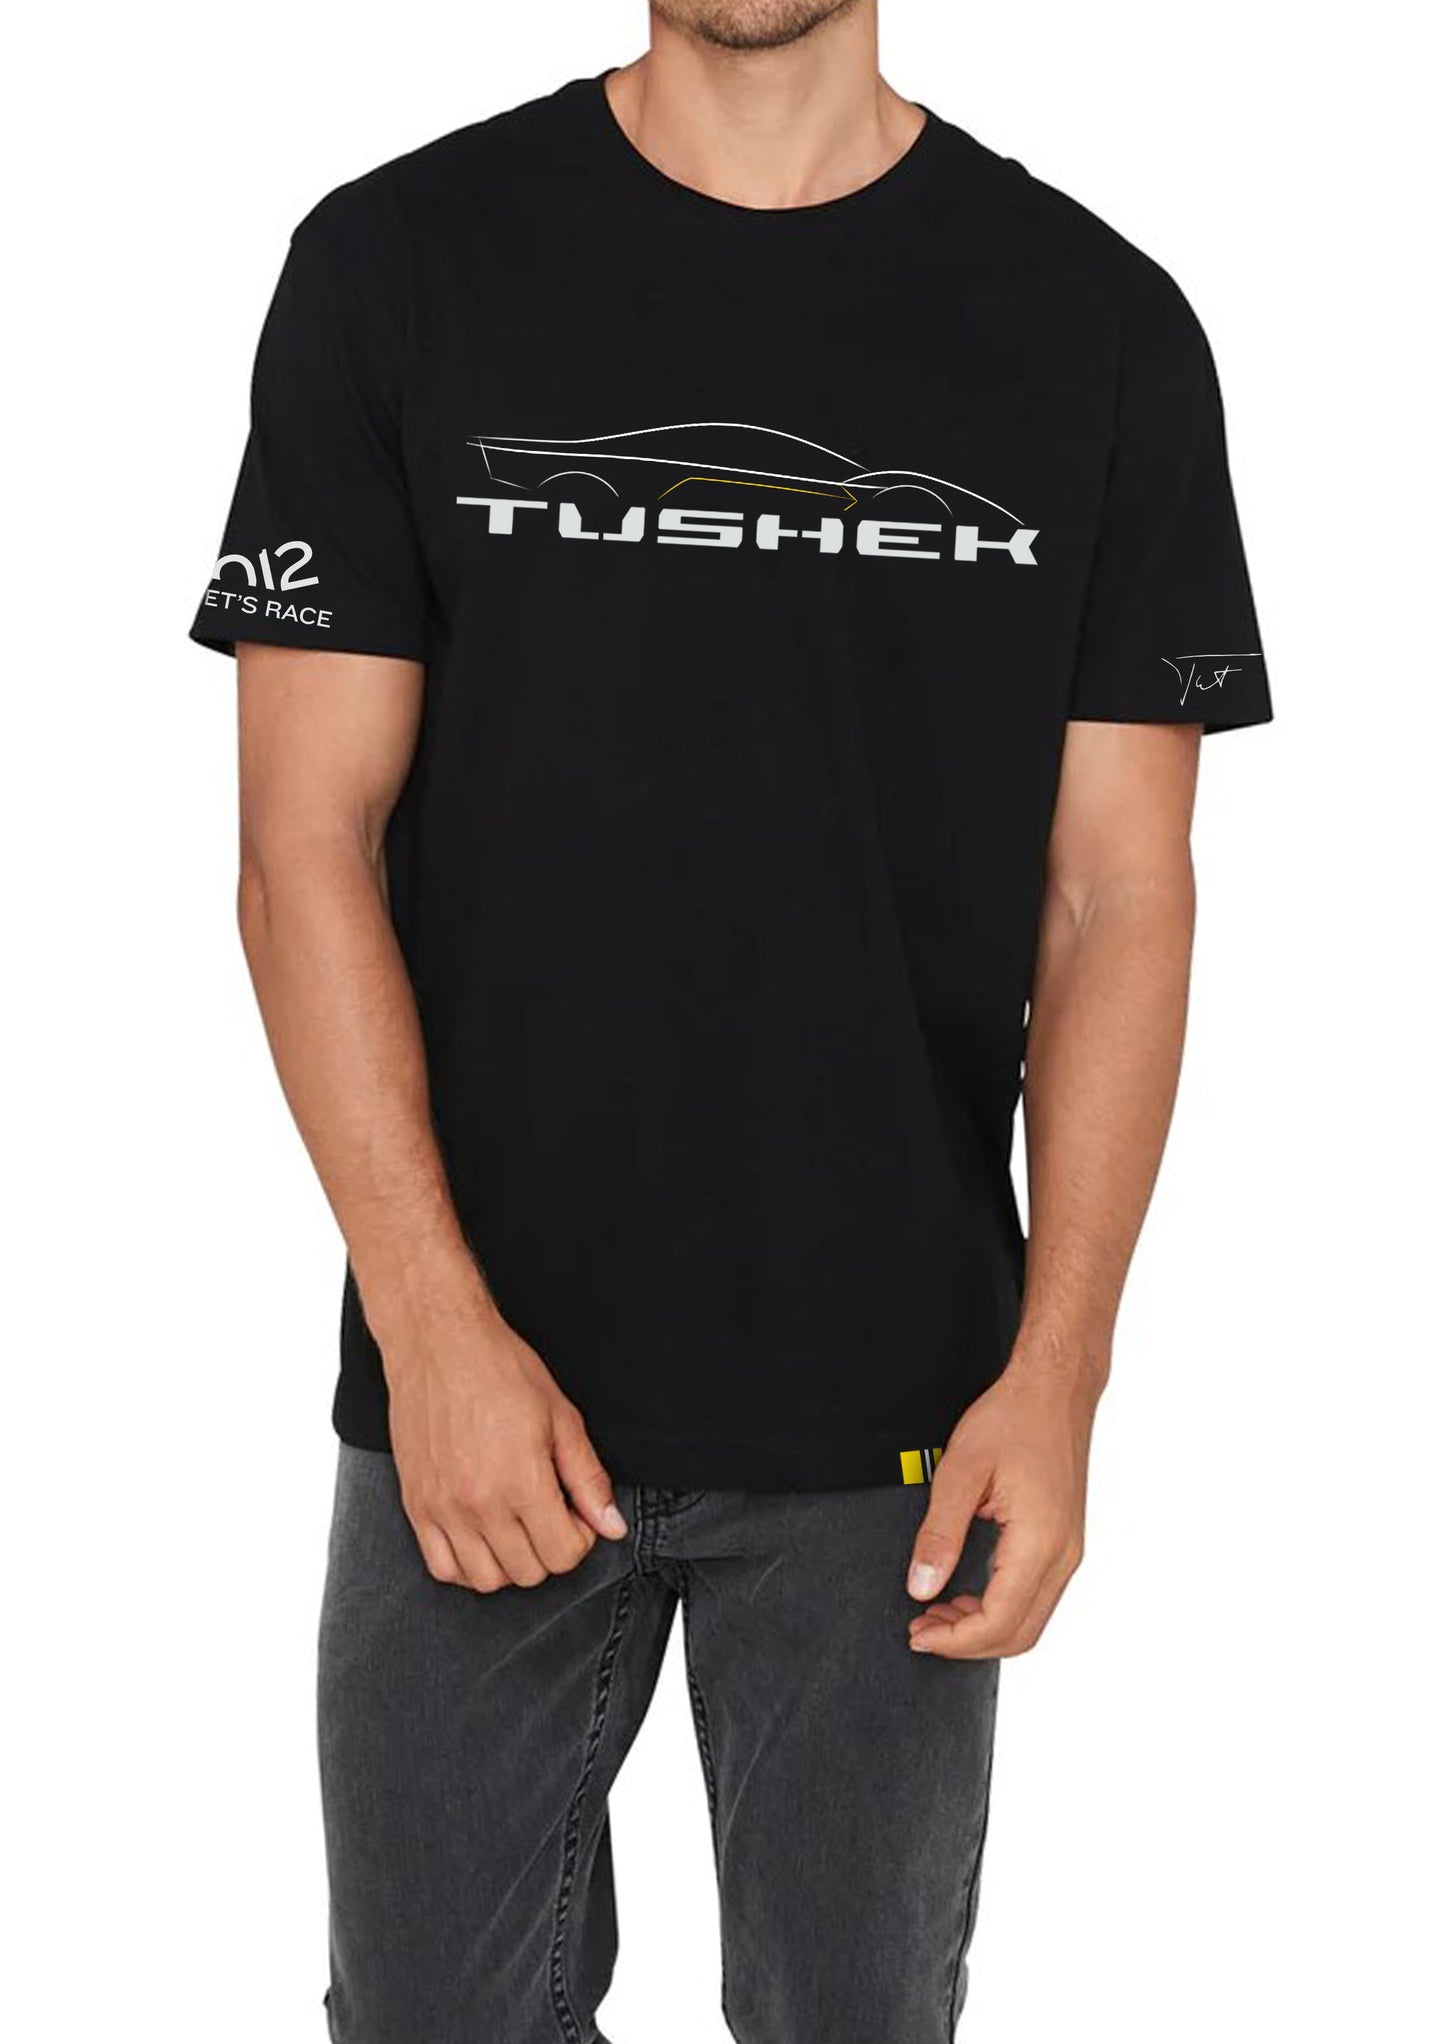 Tushek Official TS 900 T-Shirt